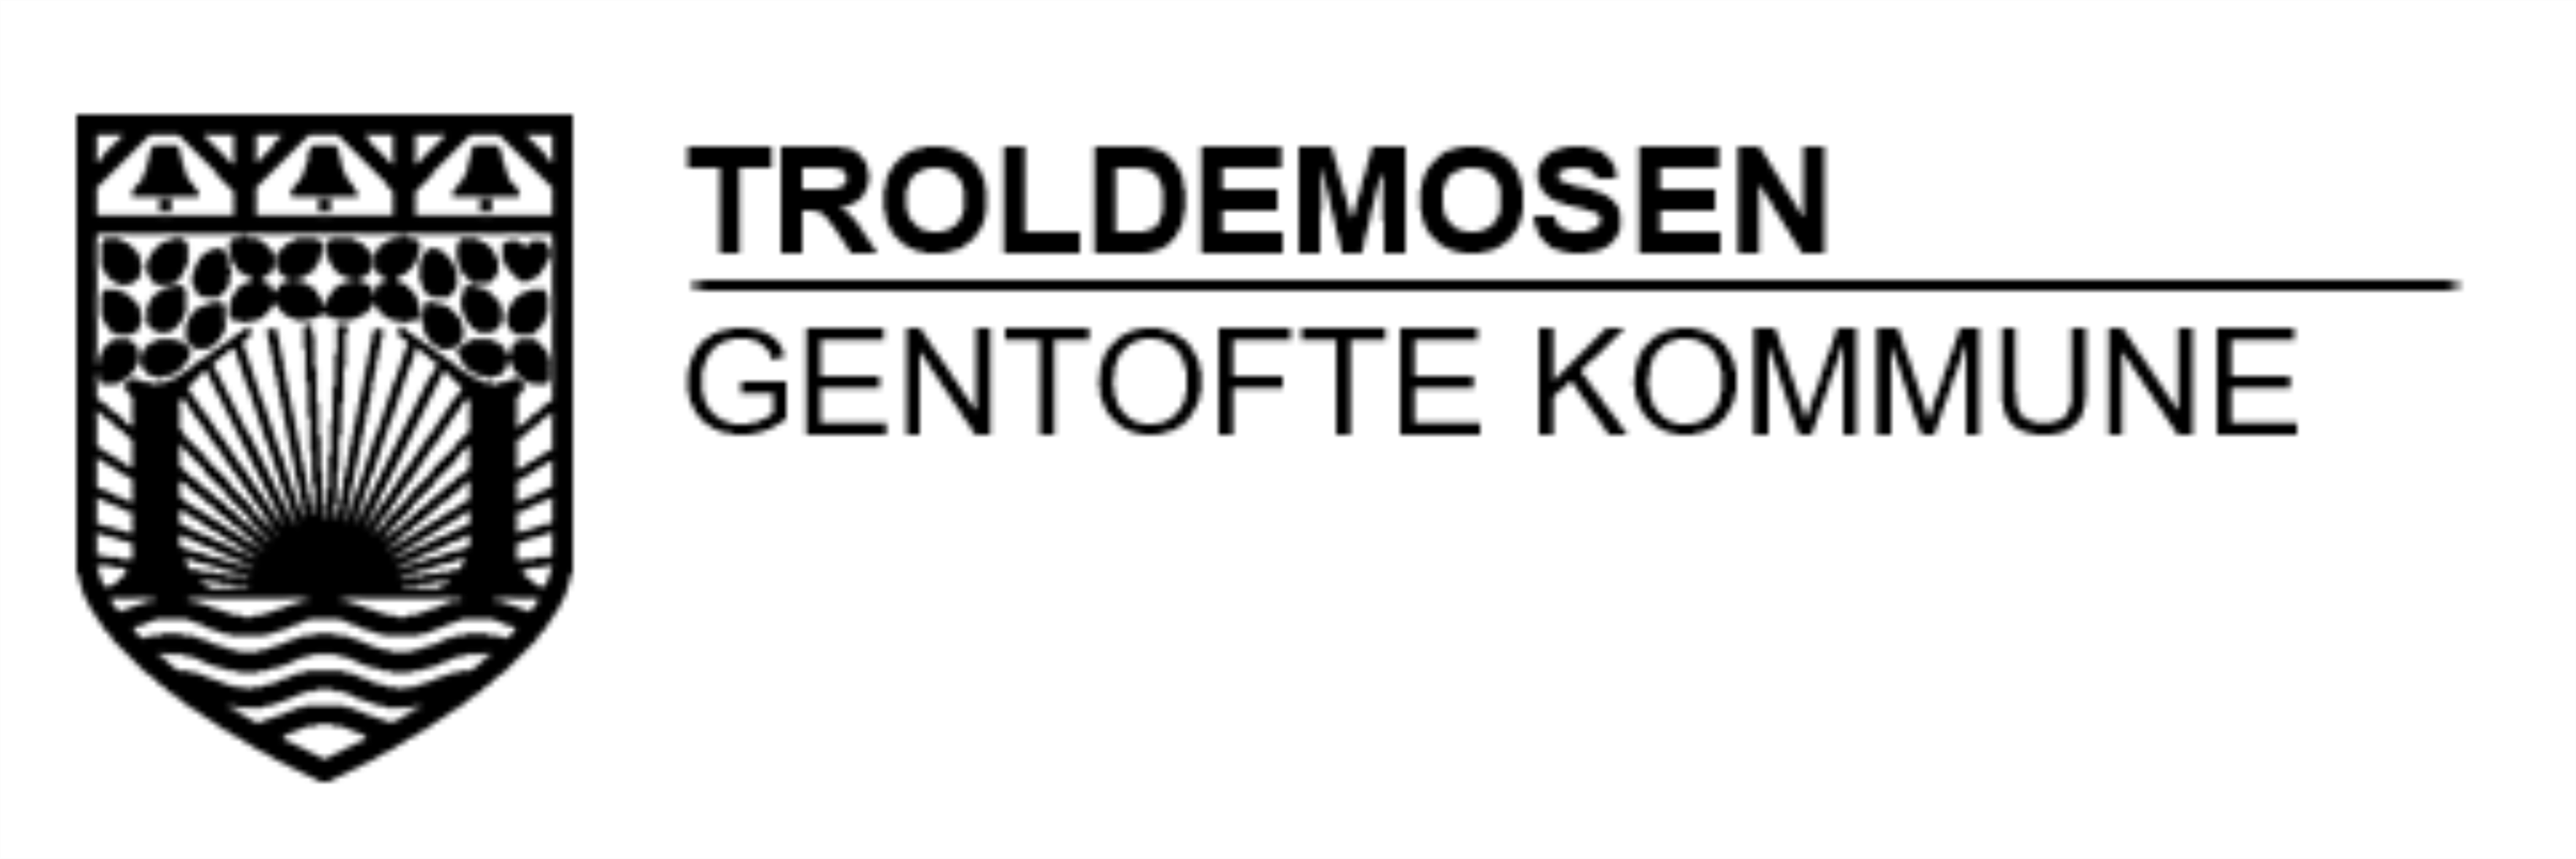 troldemosen-gentofte kommune logo